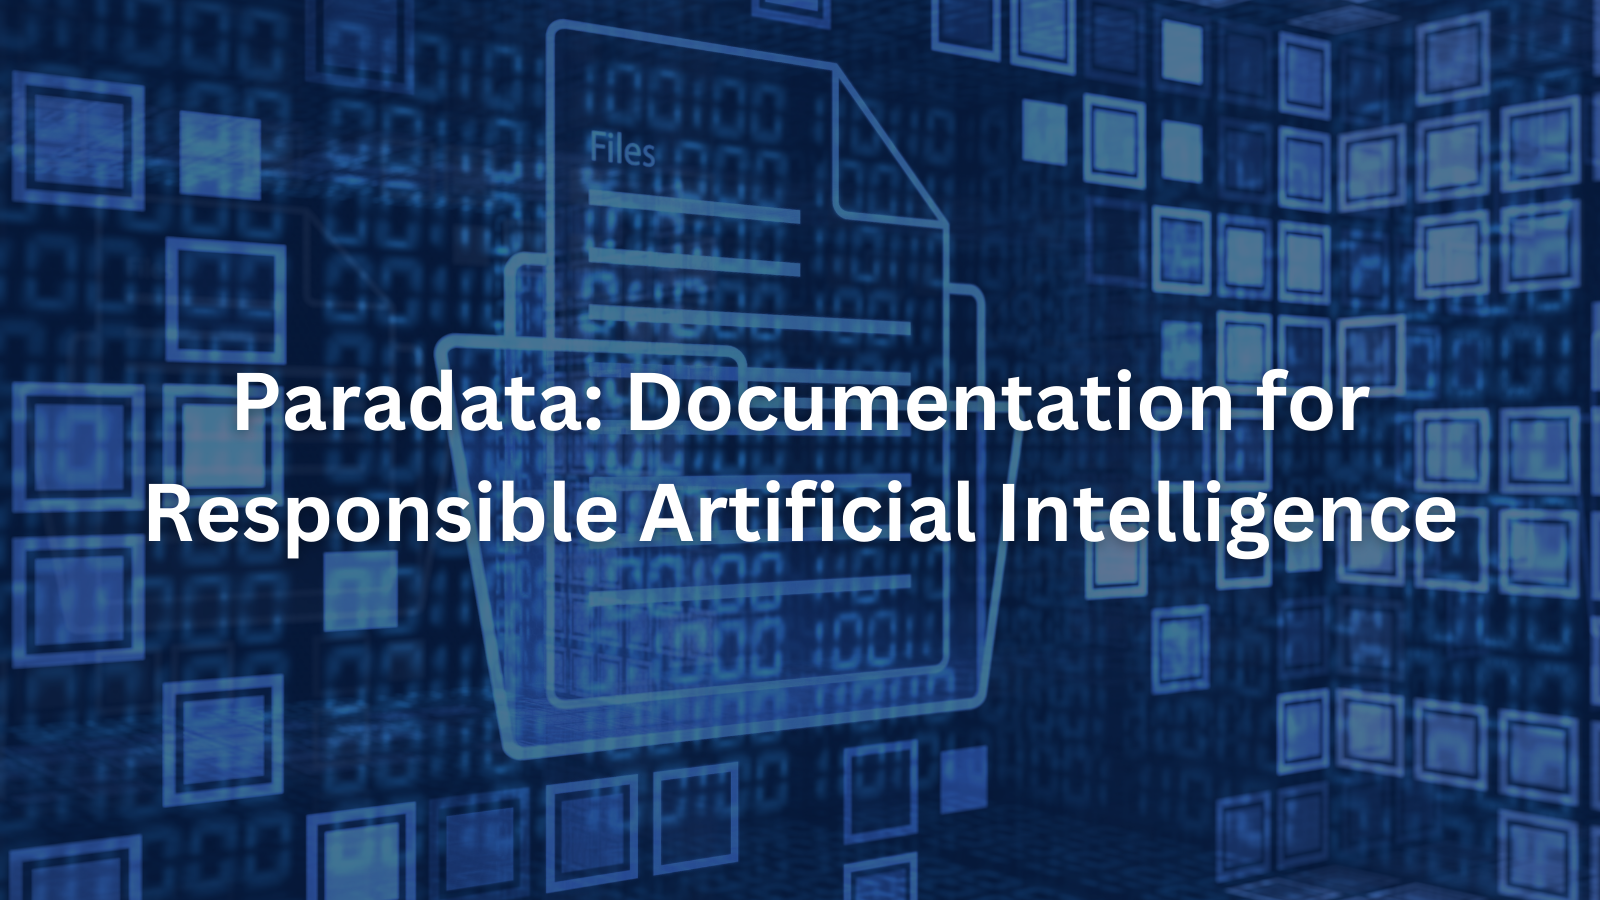 Paradata: Documentation for Responsible Artificial Intelligence